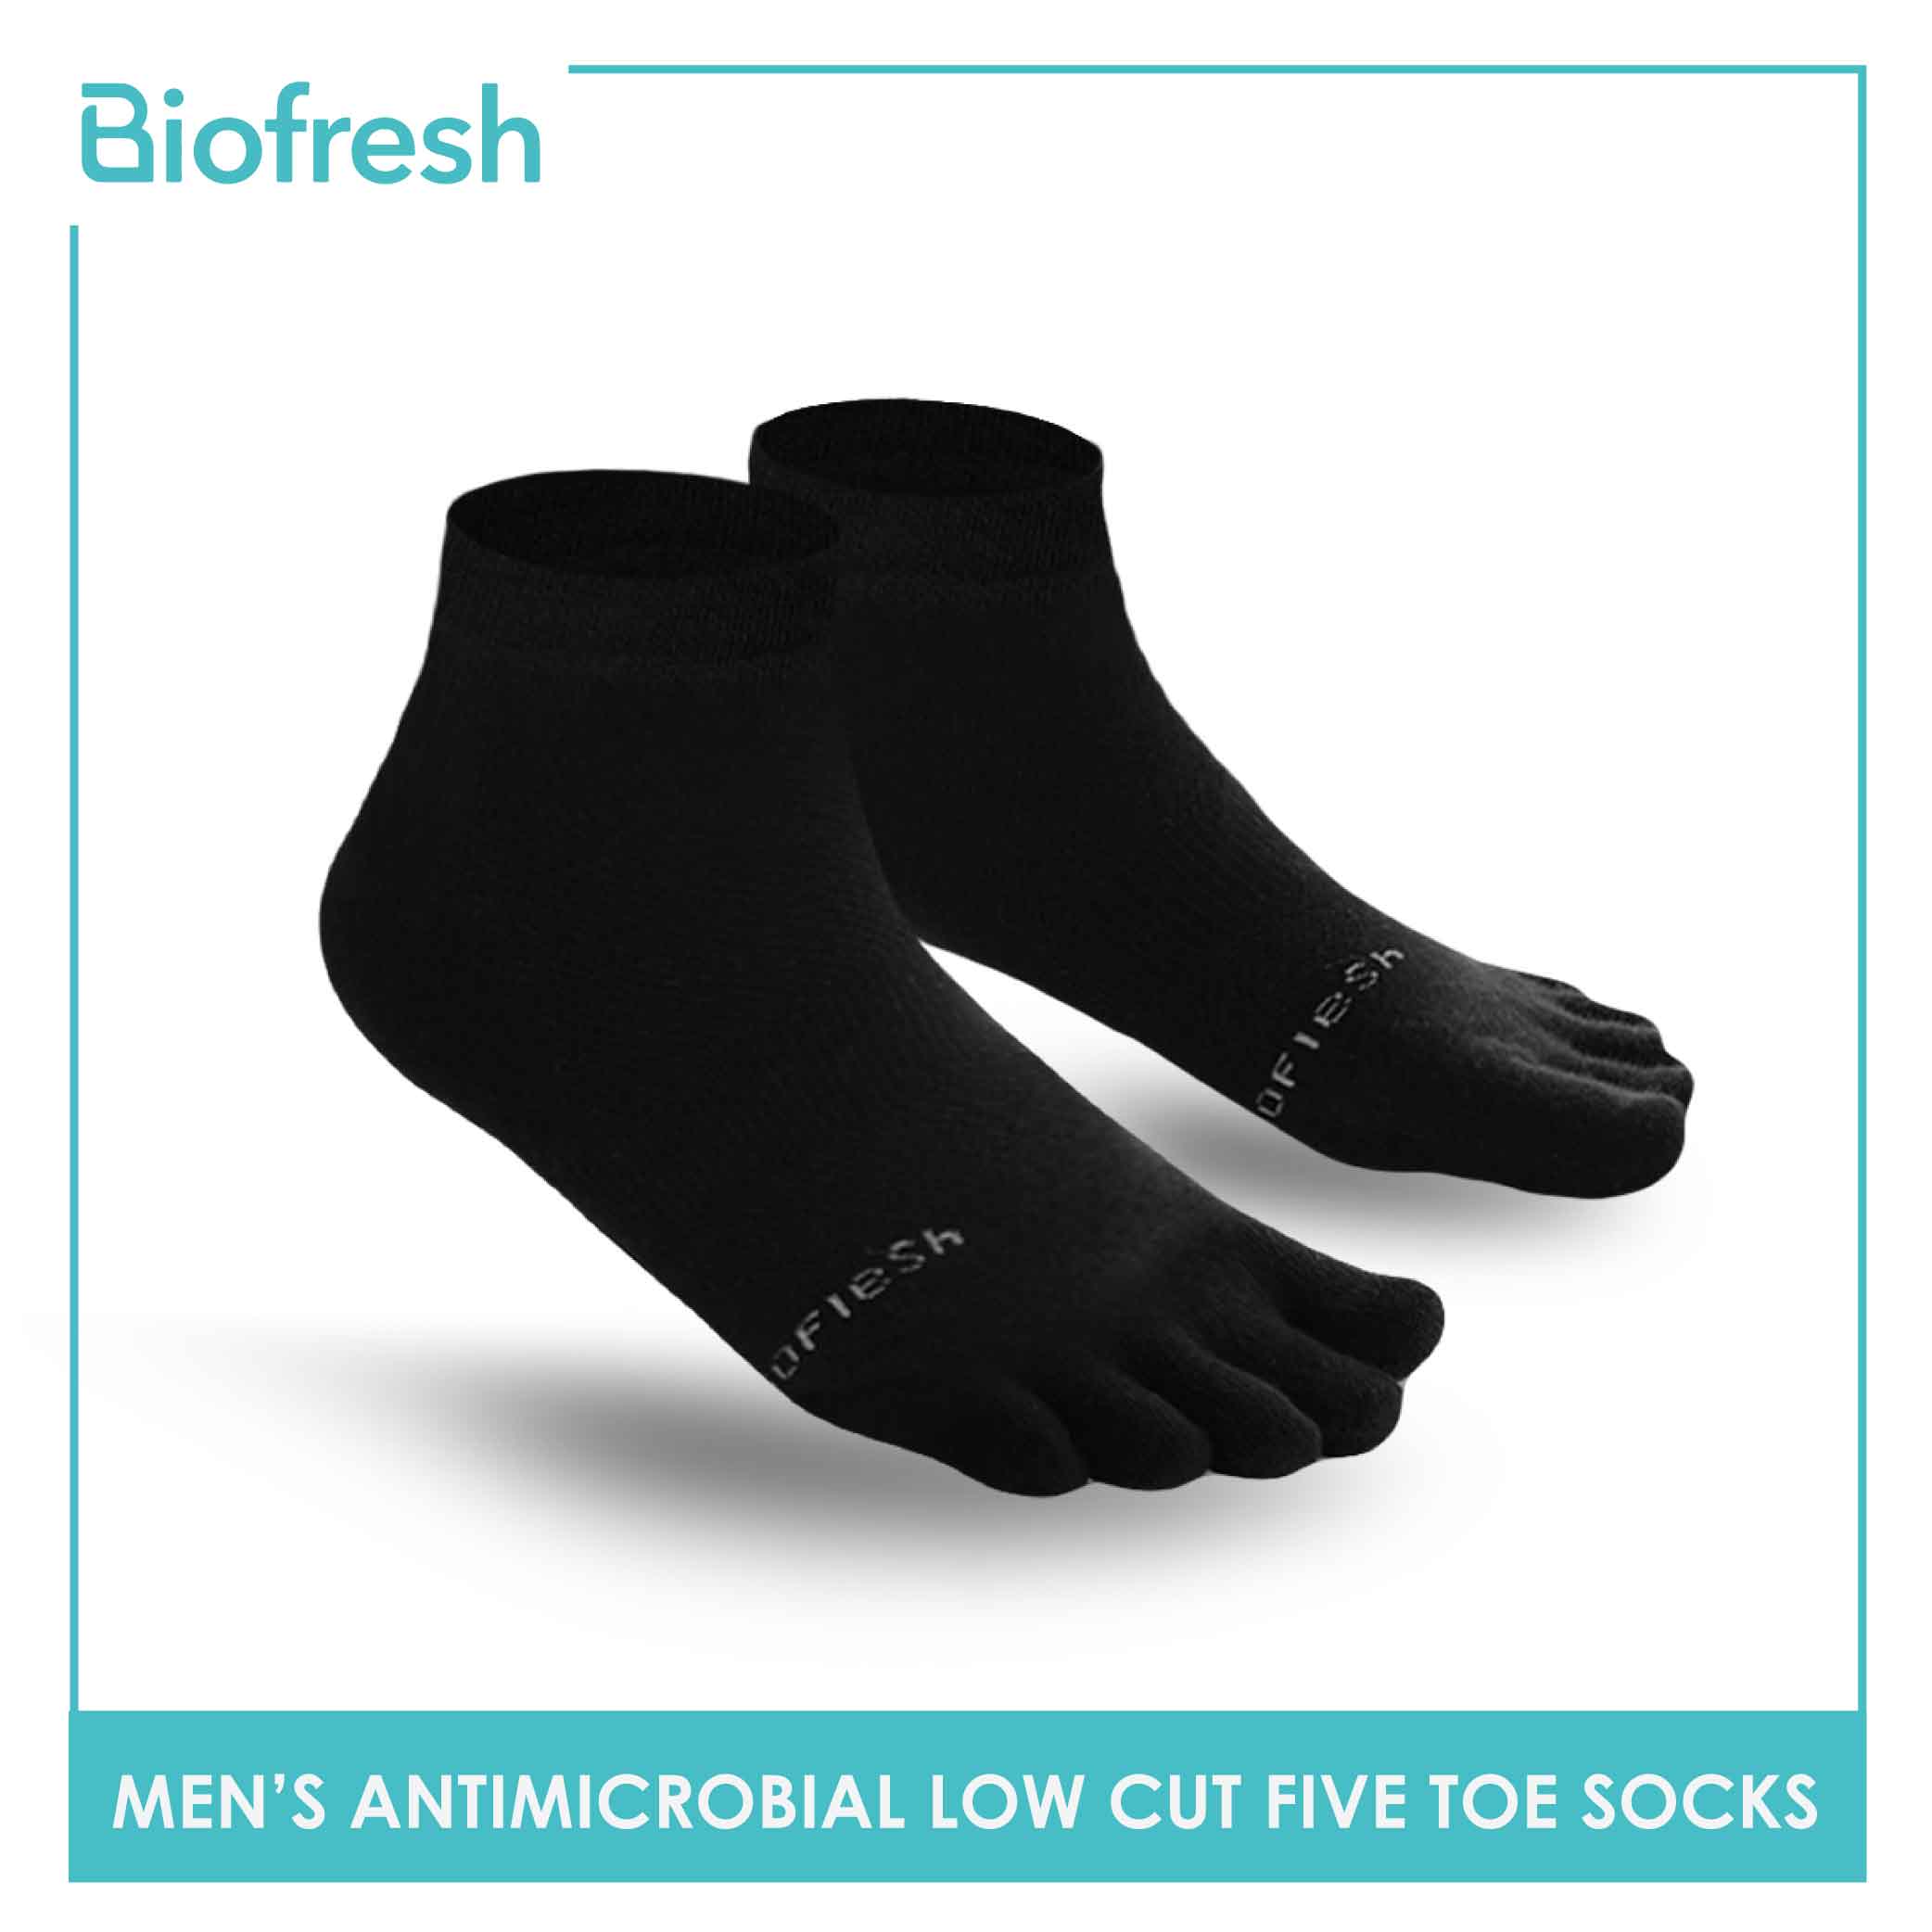 Men's Antimicrobial Five Toe Low Cut Sports Socks Ph